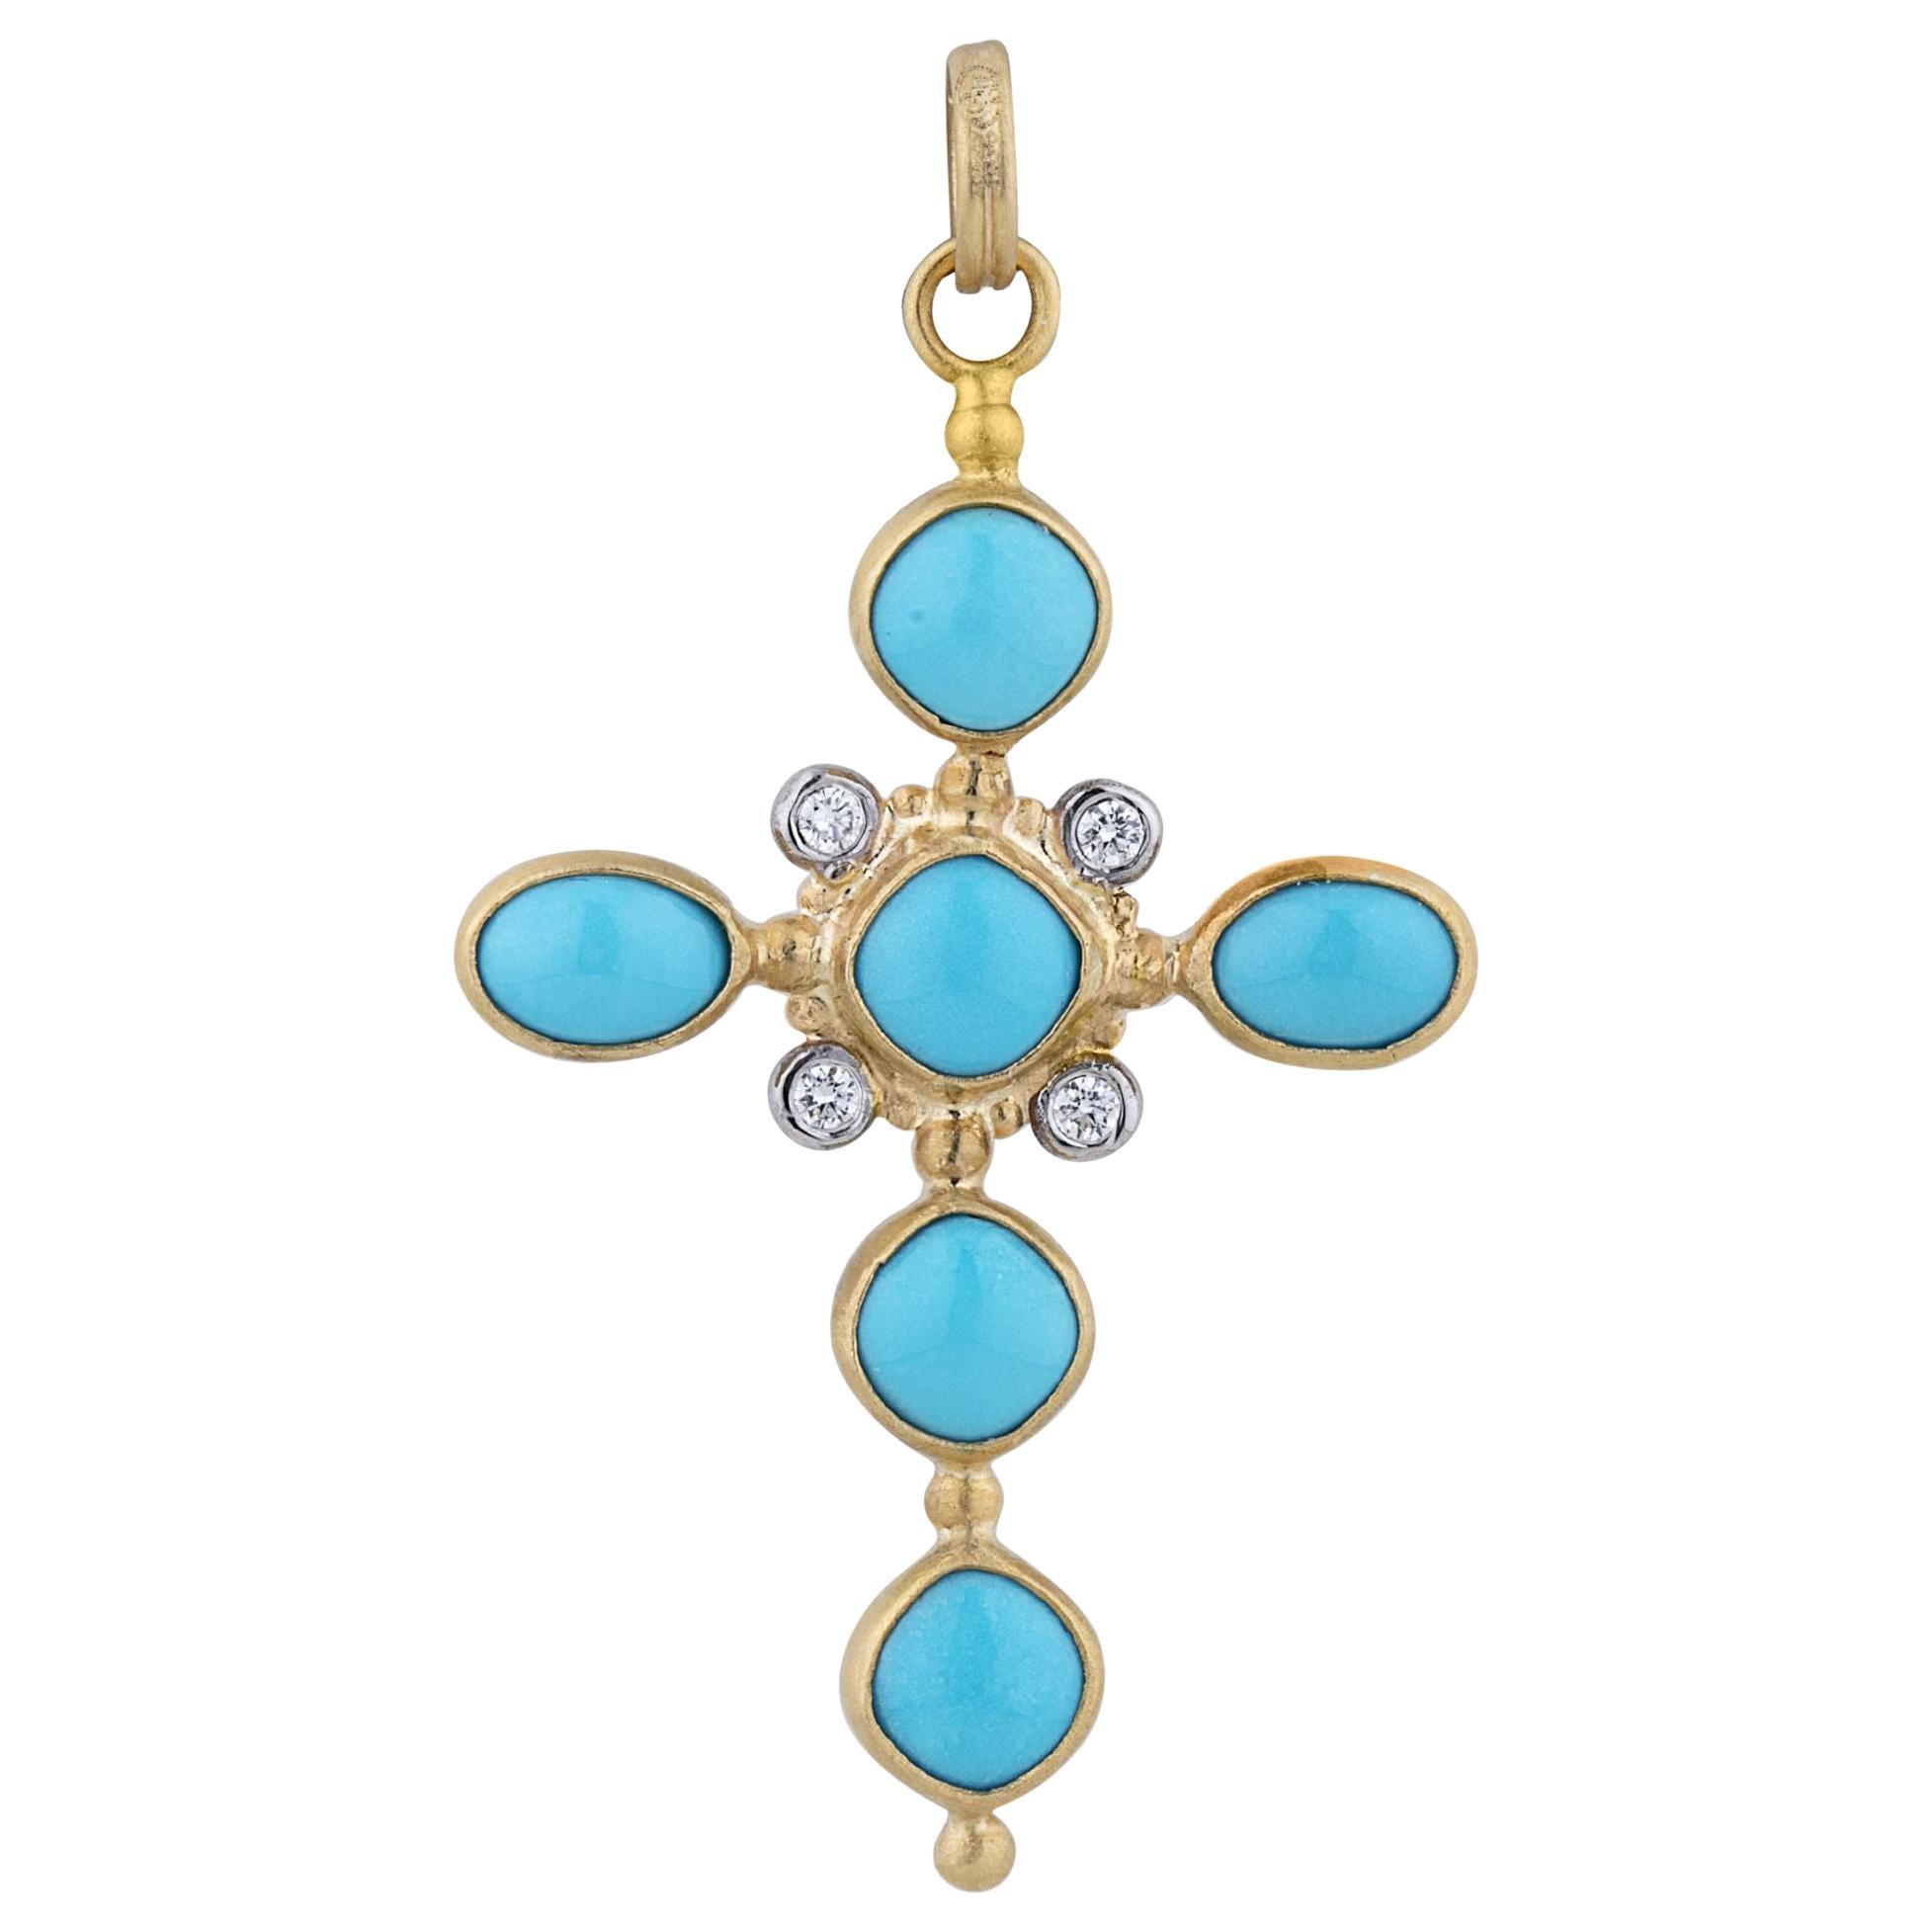 22 Karat Gold and Turquoise, Diamond Cross Pendant Necklace